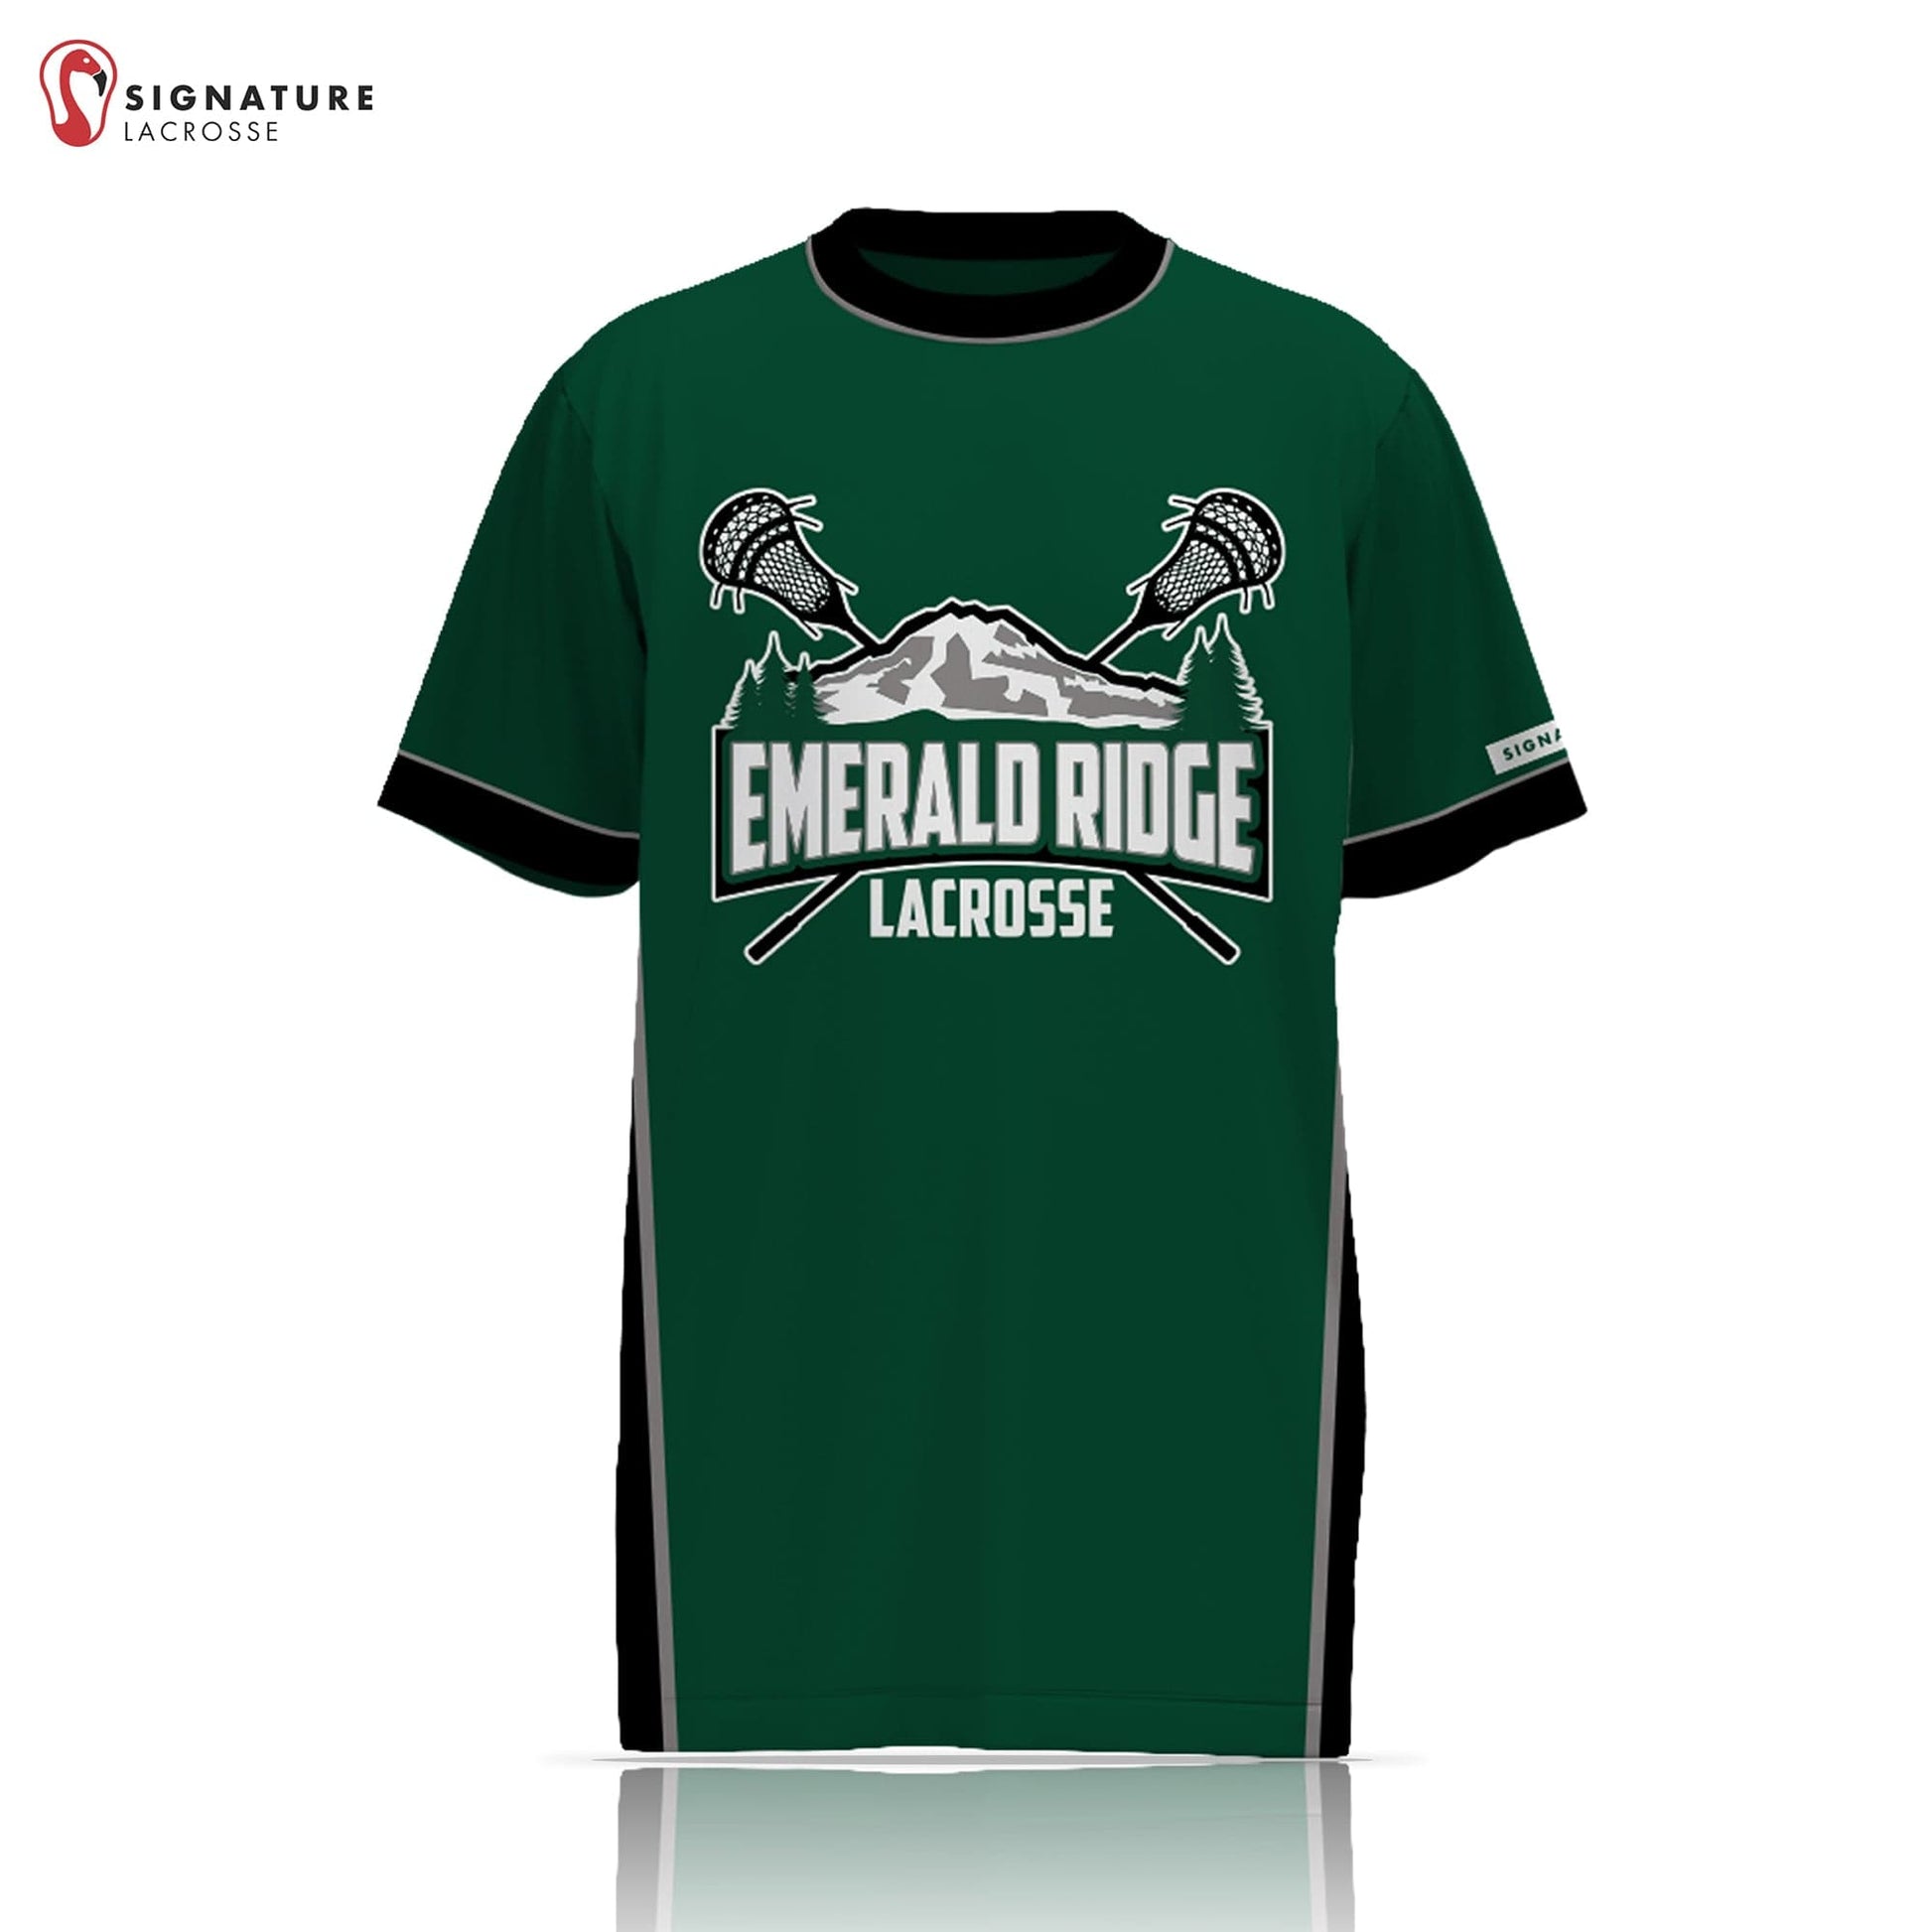 Emerald Ridge Lacrosse Men’s Short Sleeve Shooter Shirt: Grade 5-6 Signature Lacrosse